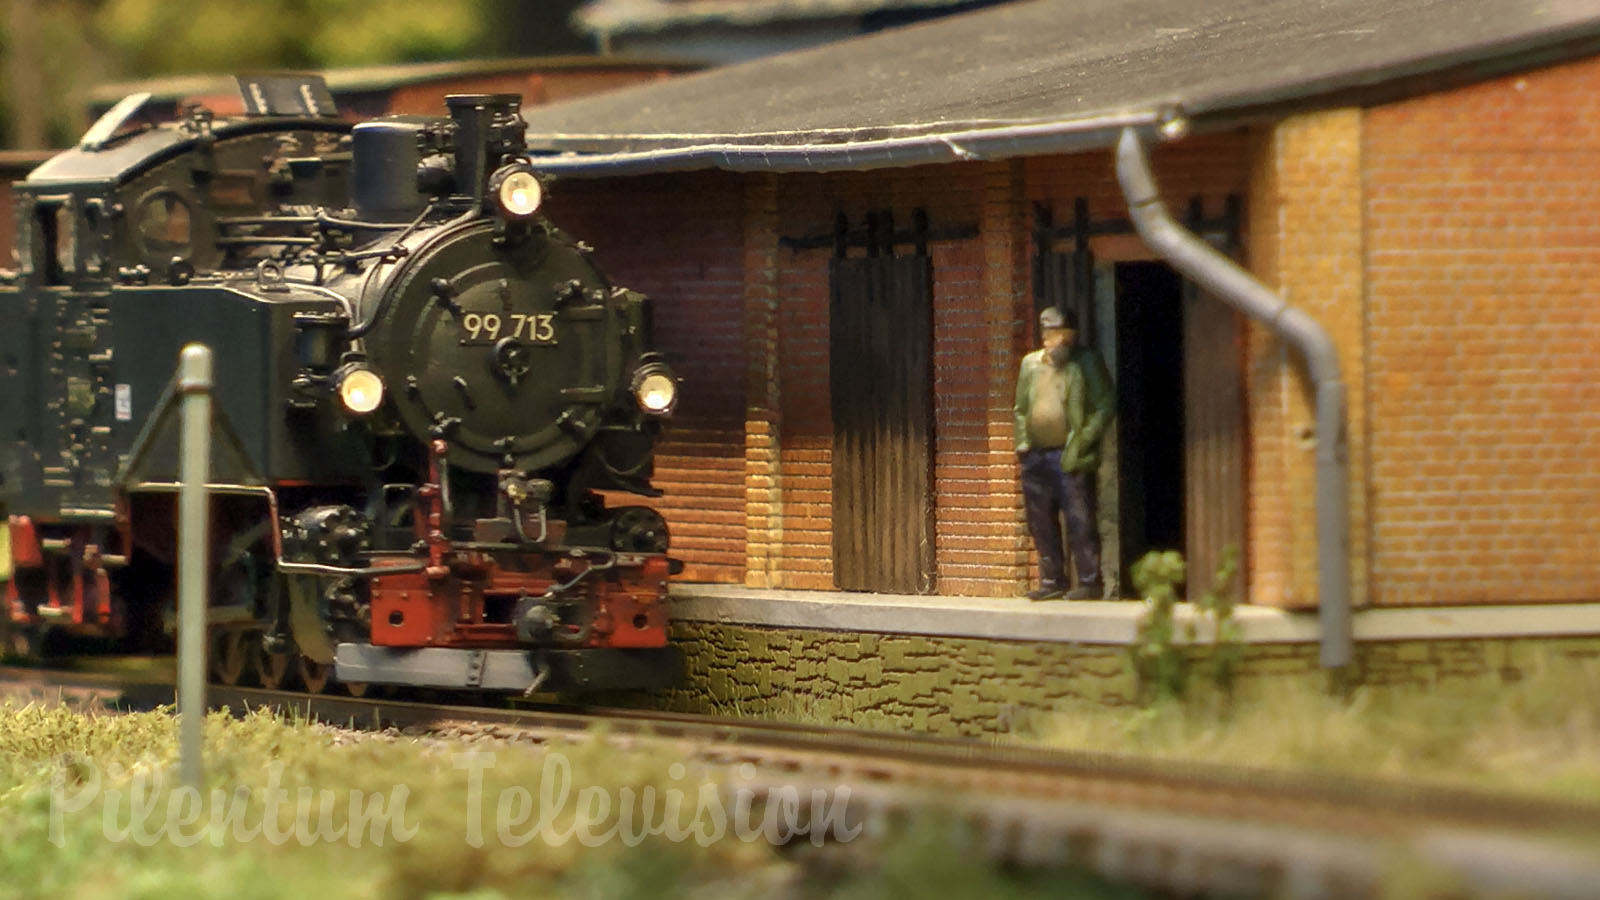 Beautiful Model Steam Train Layout of the Saxon Narrow Gauge Railways with Transporter Wagon